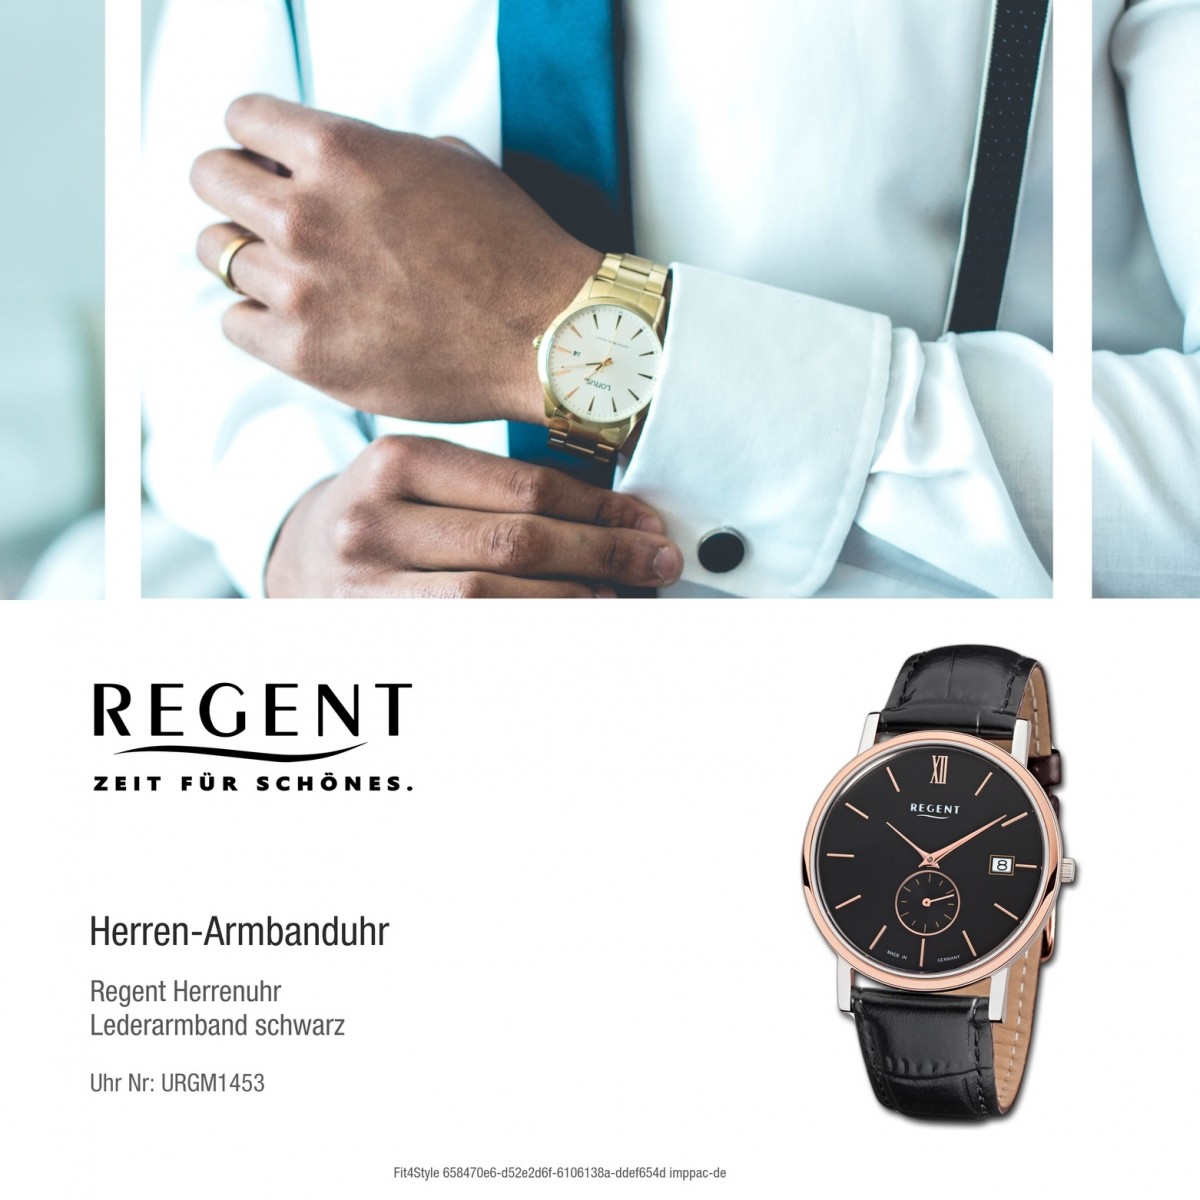 Leder-Armband Quarz-Uhr Uhr Regent schwarz URGM1453 Herren-Armbanduhr